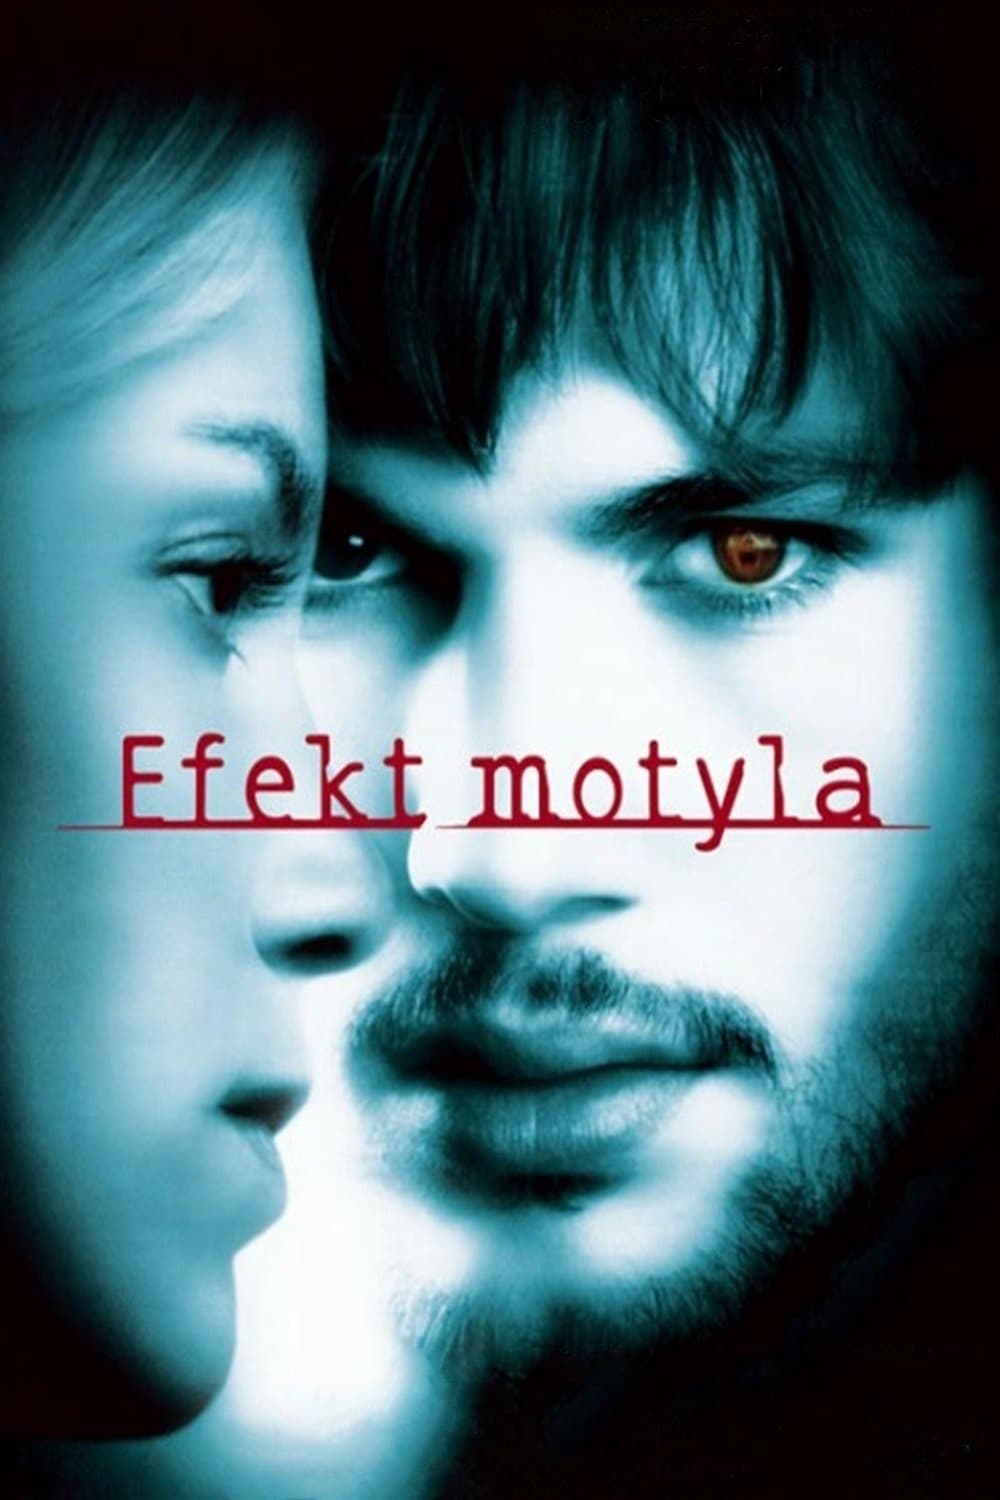 Efekt motyla (2004)